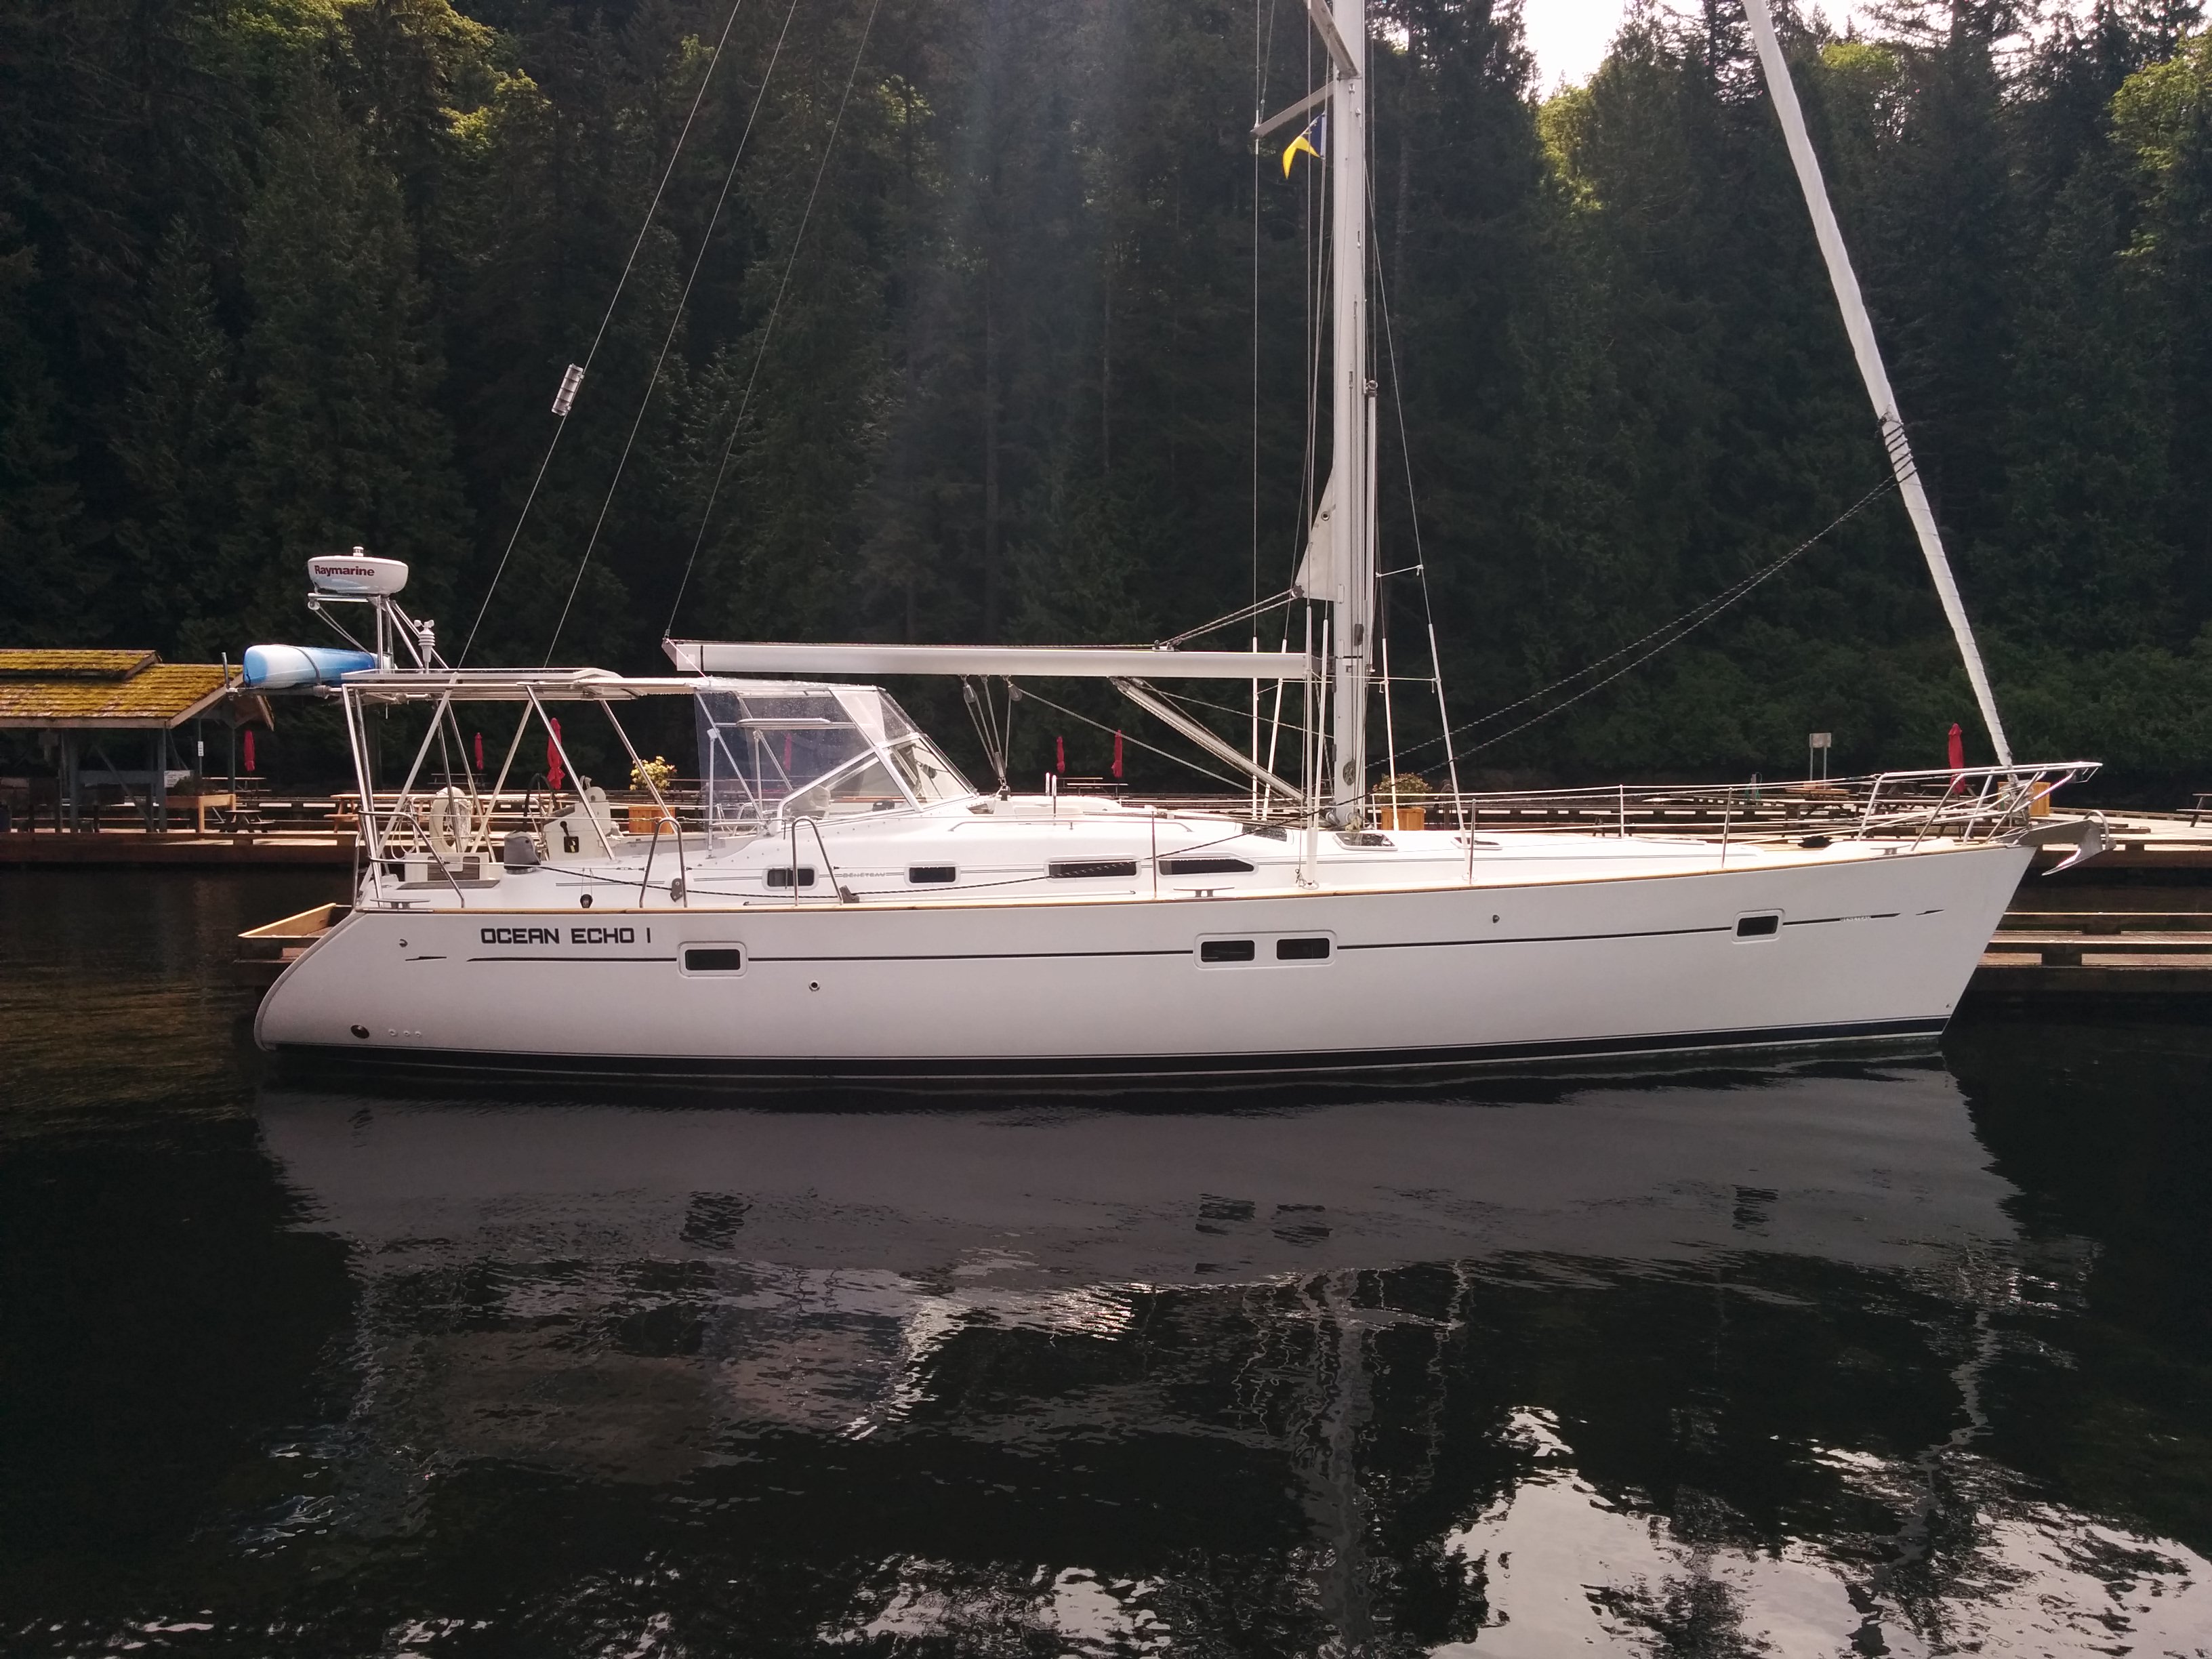 2007 Beneteau 423 Sailboat for sale in British Columbia, Canada - image 2 